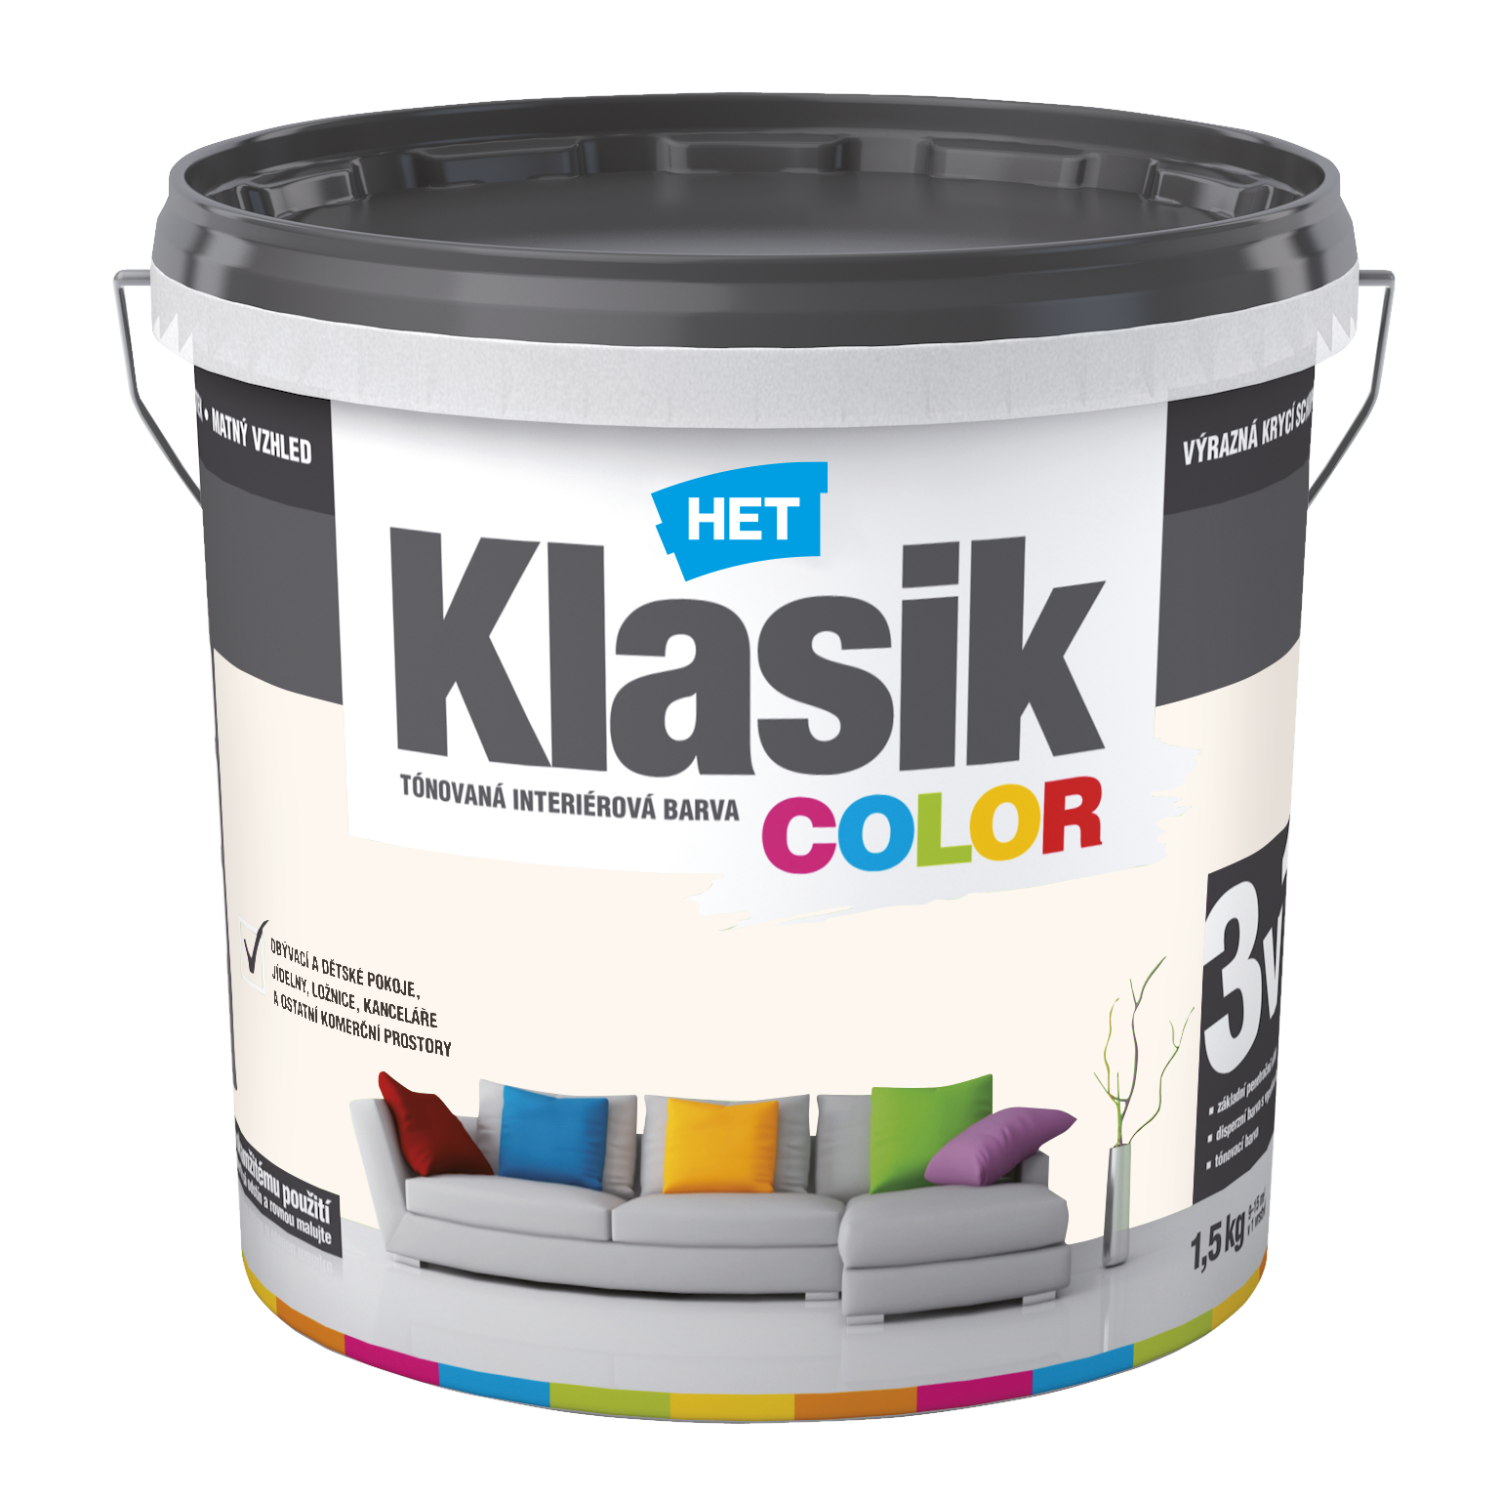 HET Klasik COLOR tónovaná interiérová akrylátová disperzná oteruvzdorná farba 1,5 kg, KC0228 - béžový mandľový